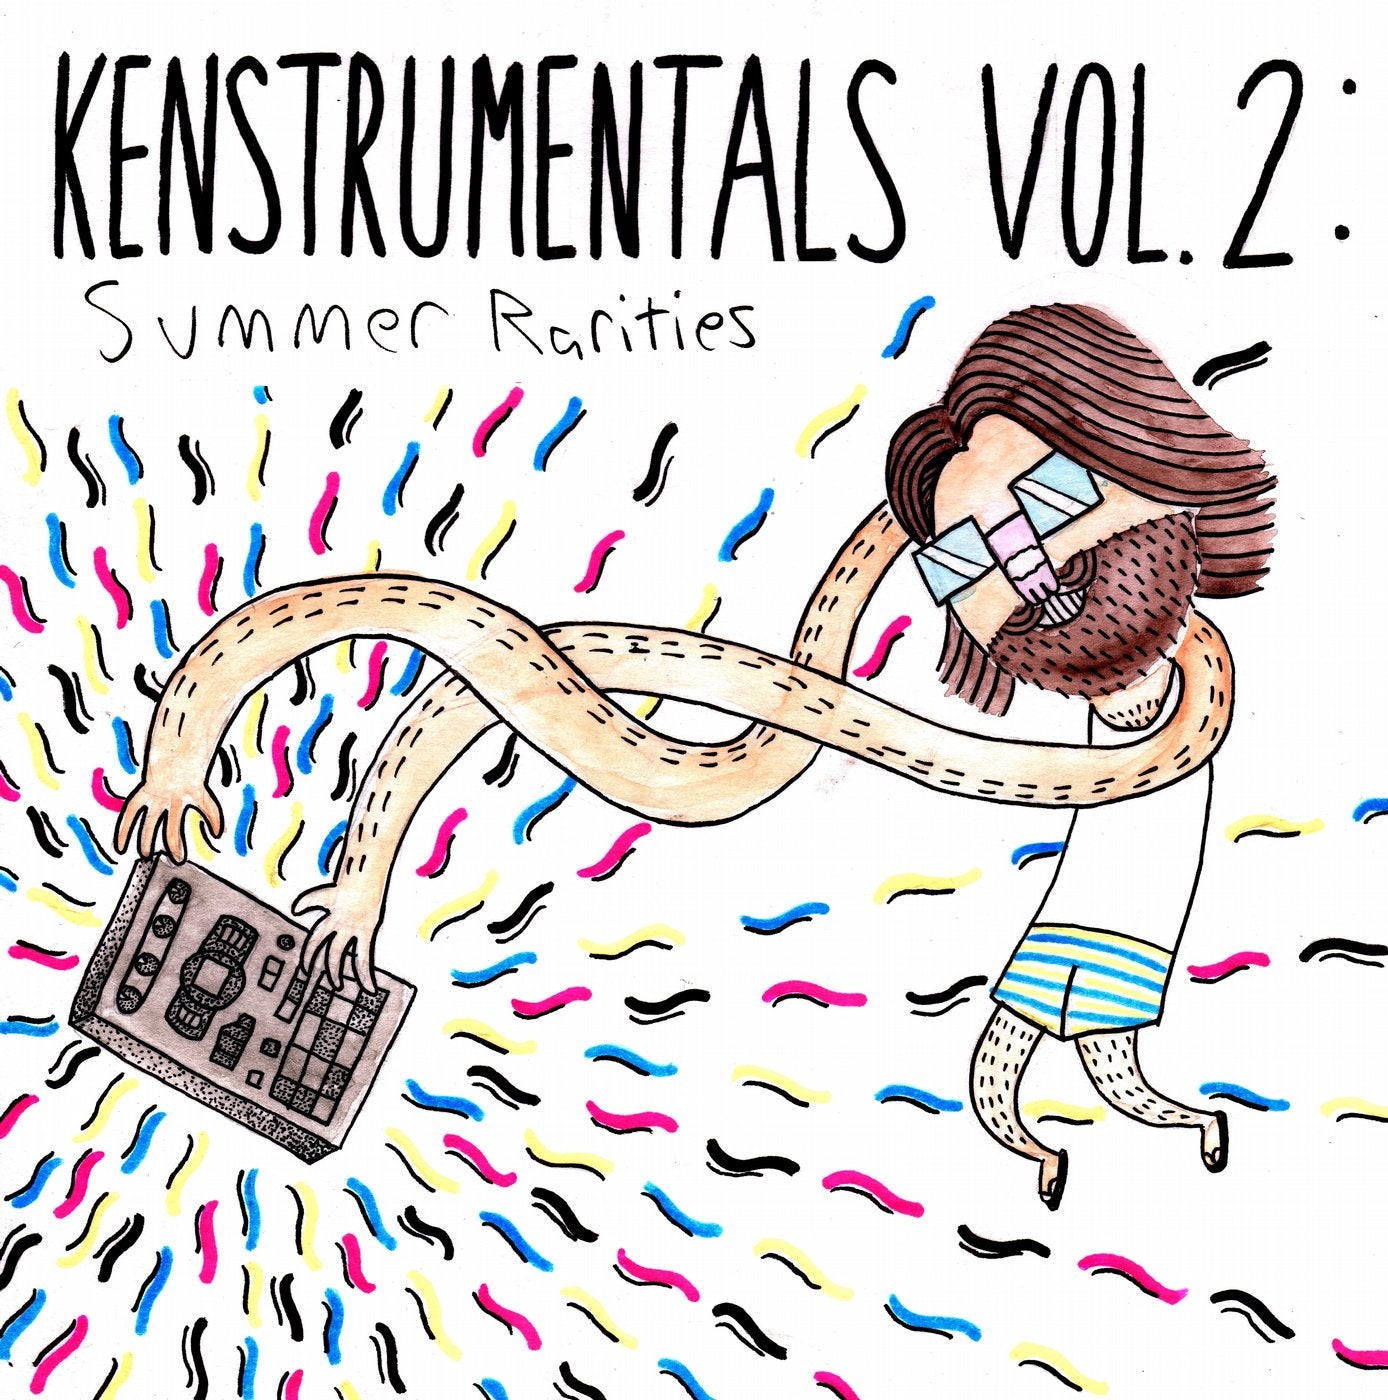 Kenstrumentals Vol. 2 (Summer Rarities)